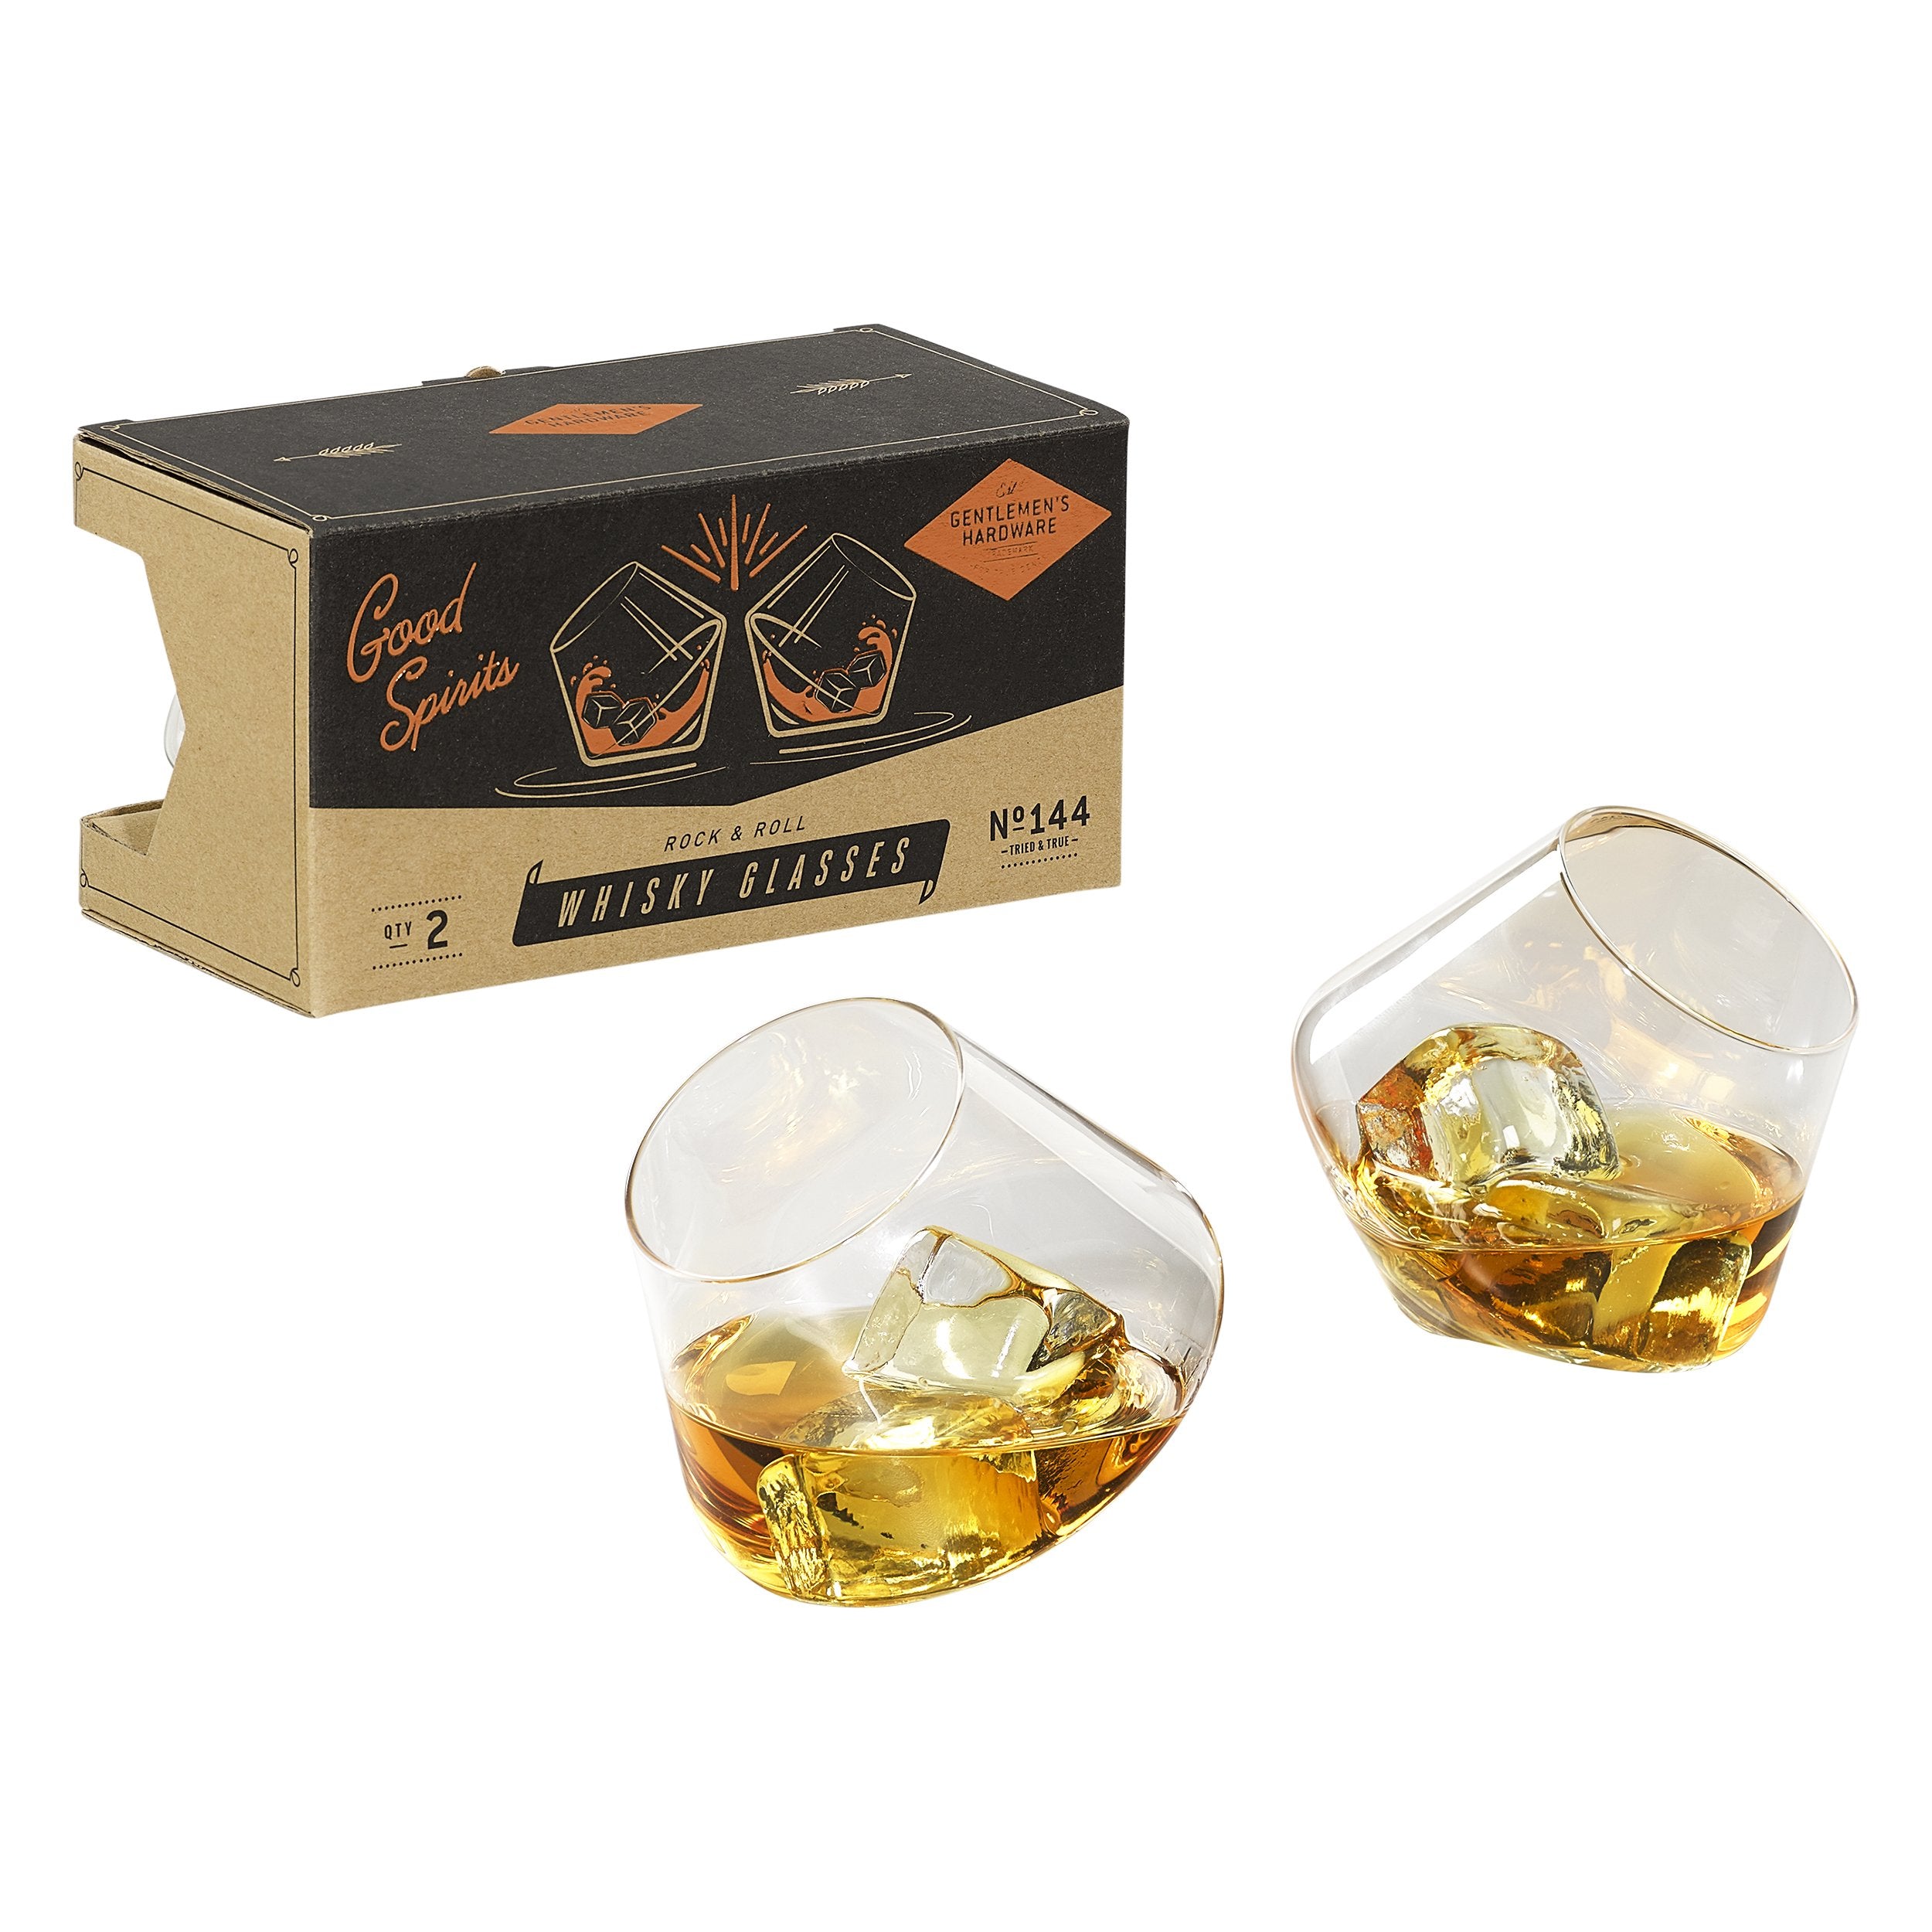 Gentlemen's Hardware Cocktail Tumbler & Whiskey Stones Set